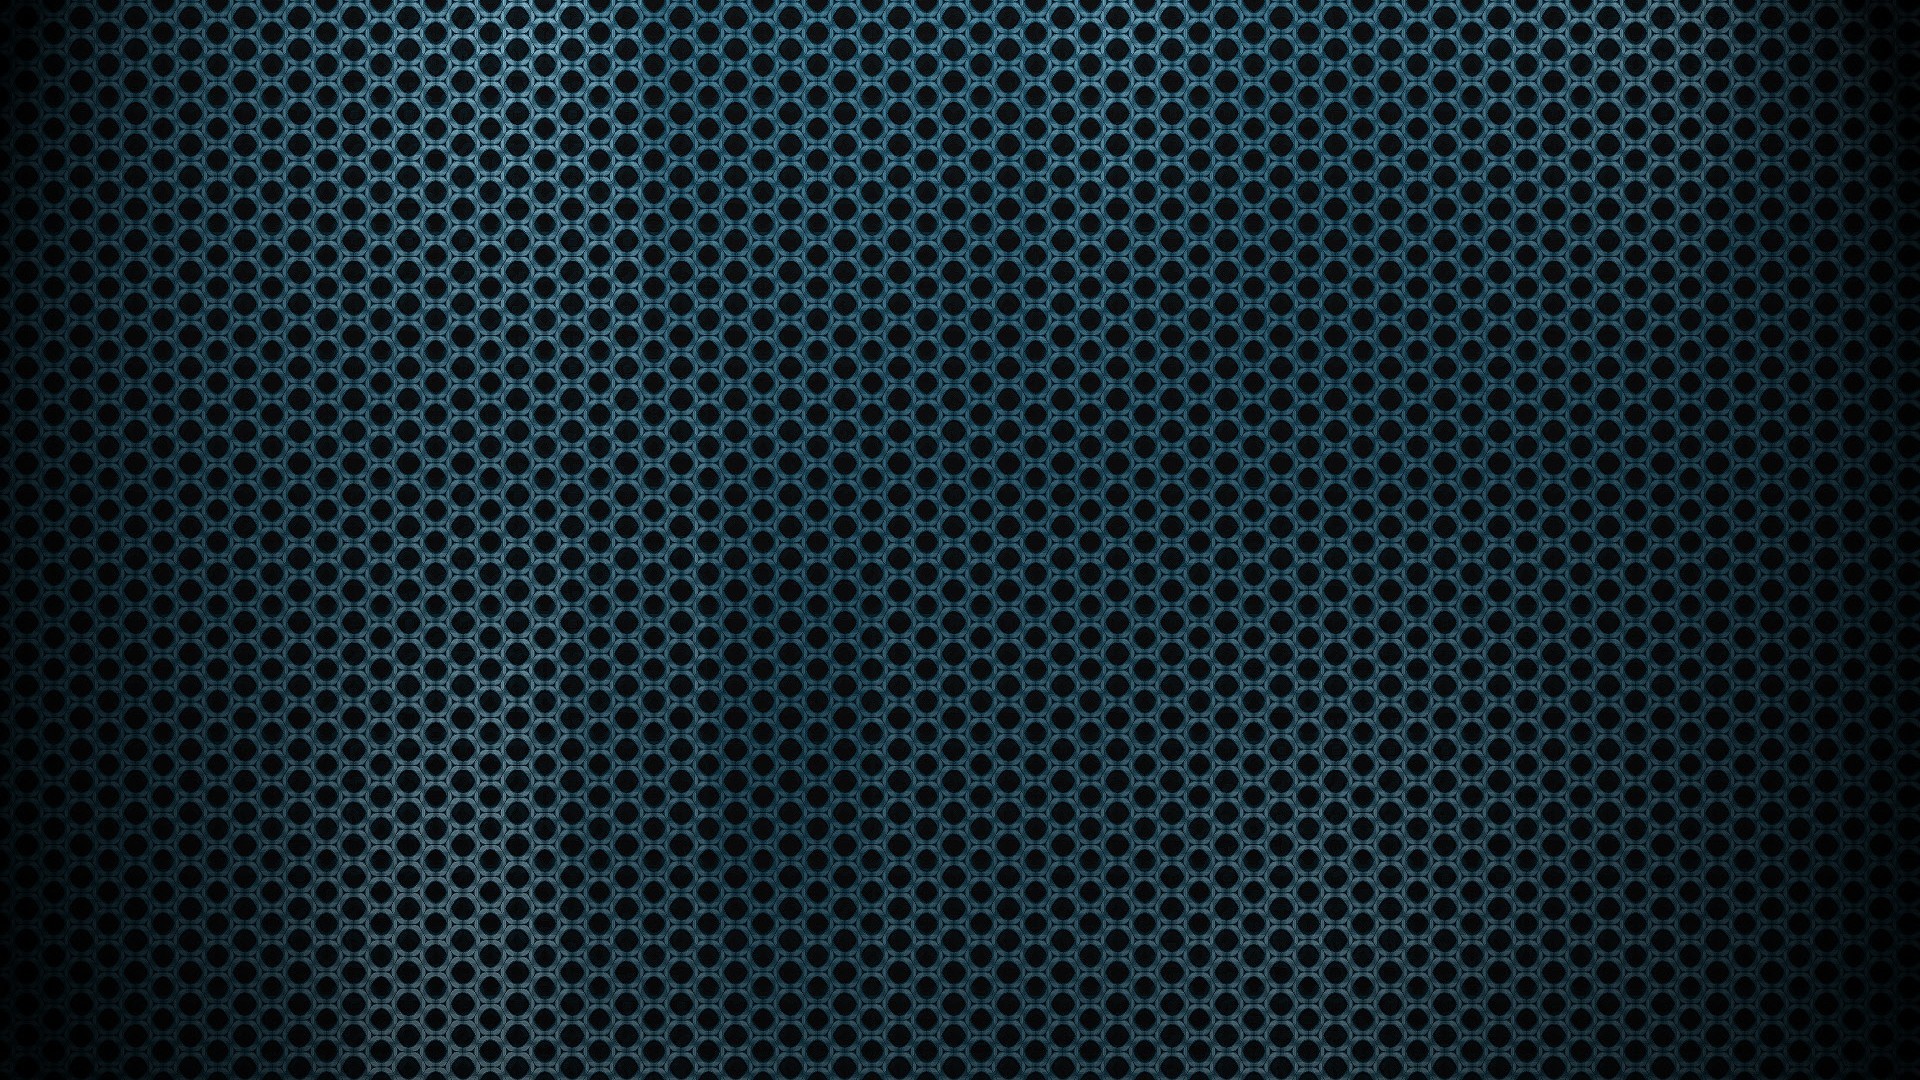 1920x1080 black carbon fiber iphone wallpaper - davidovic